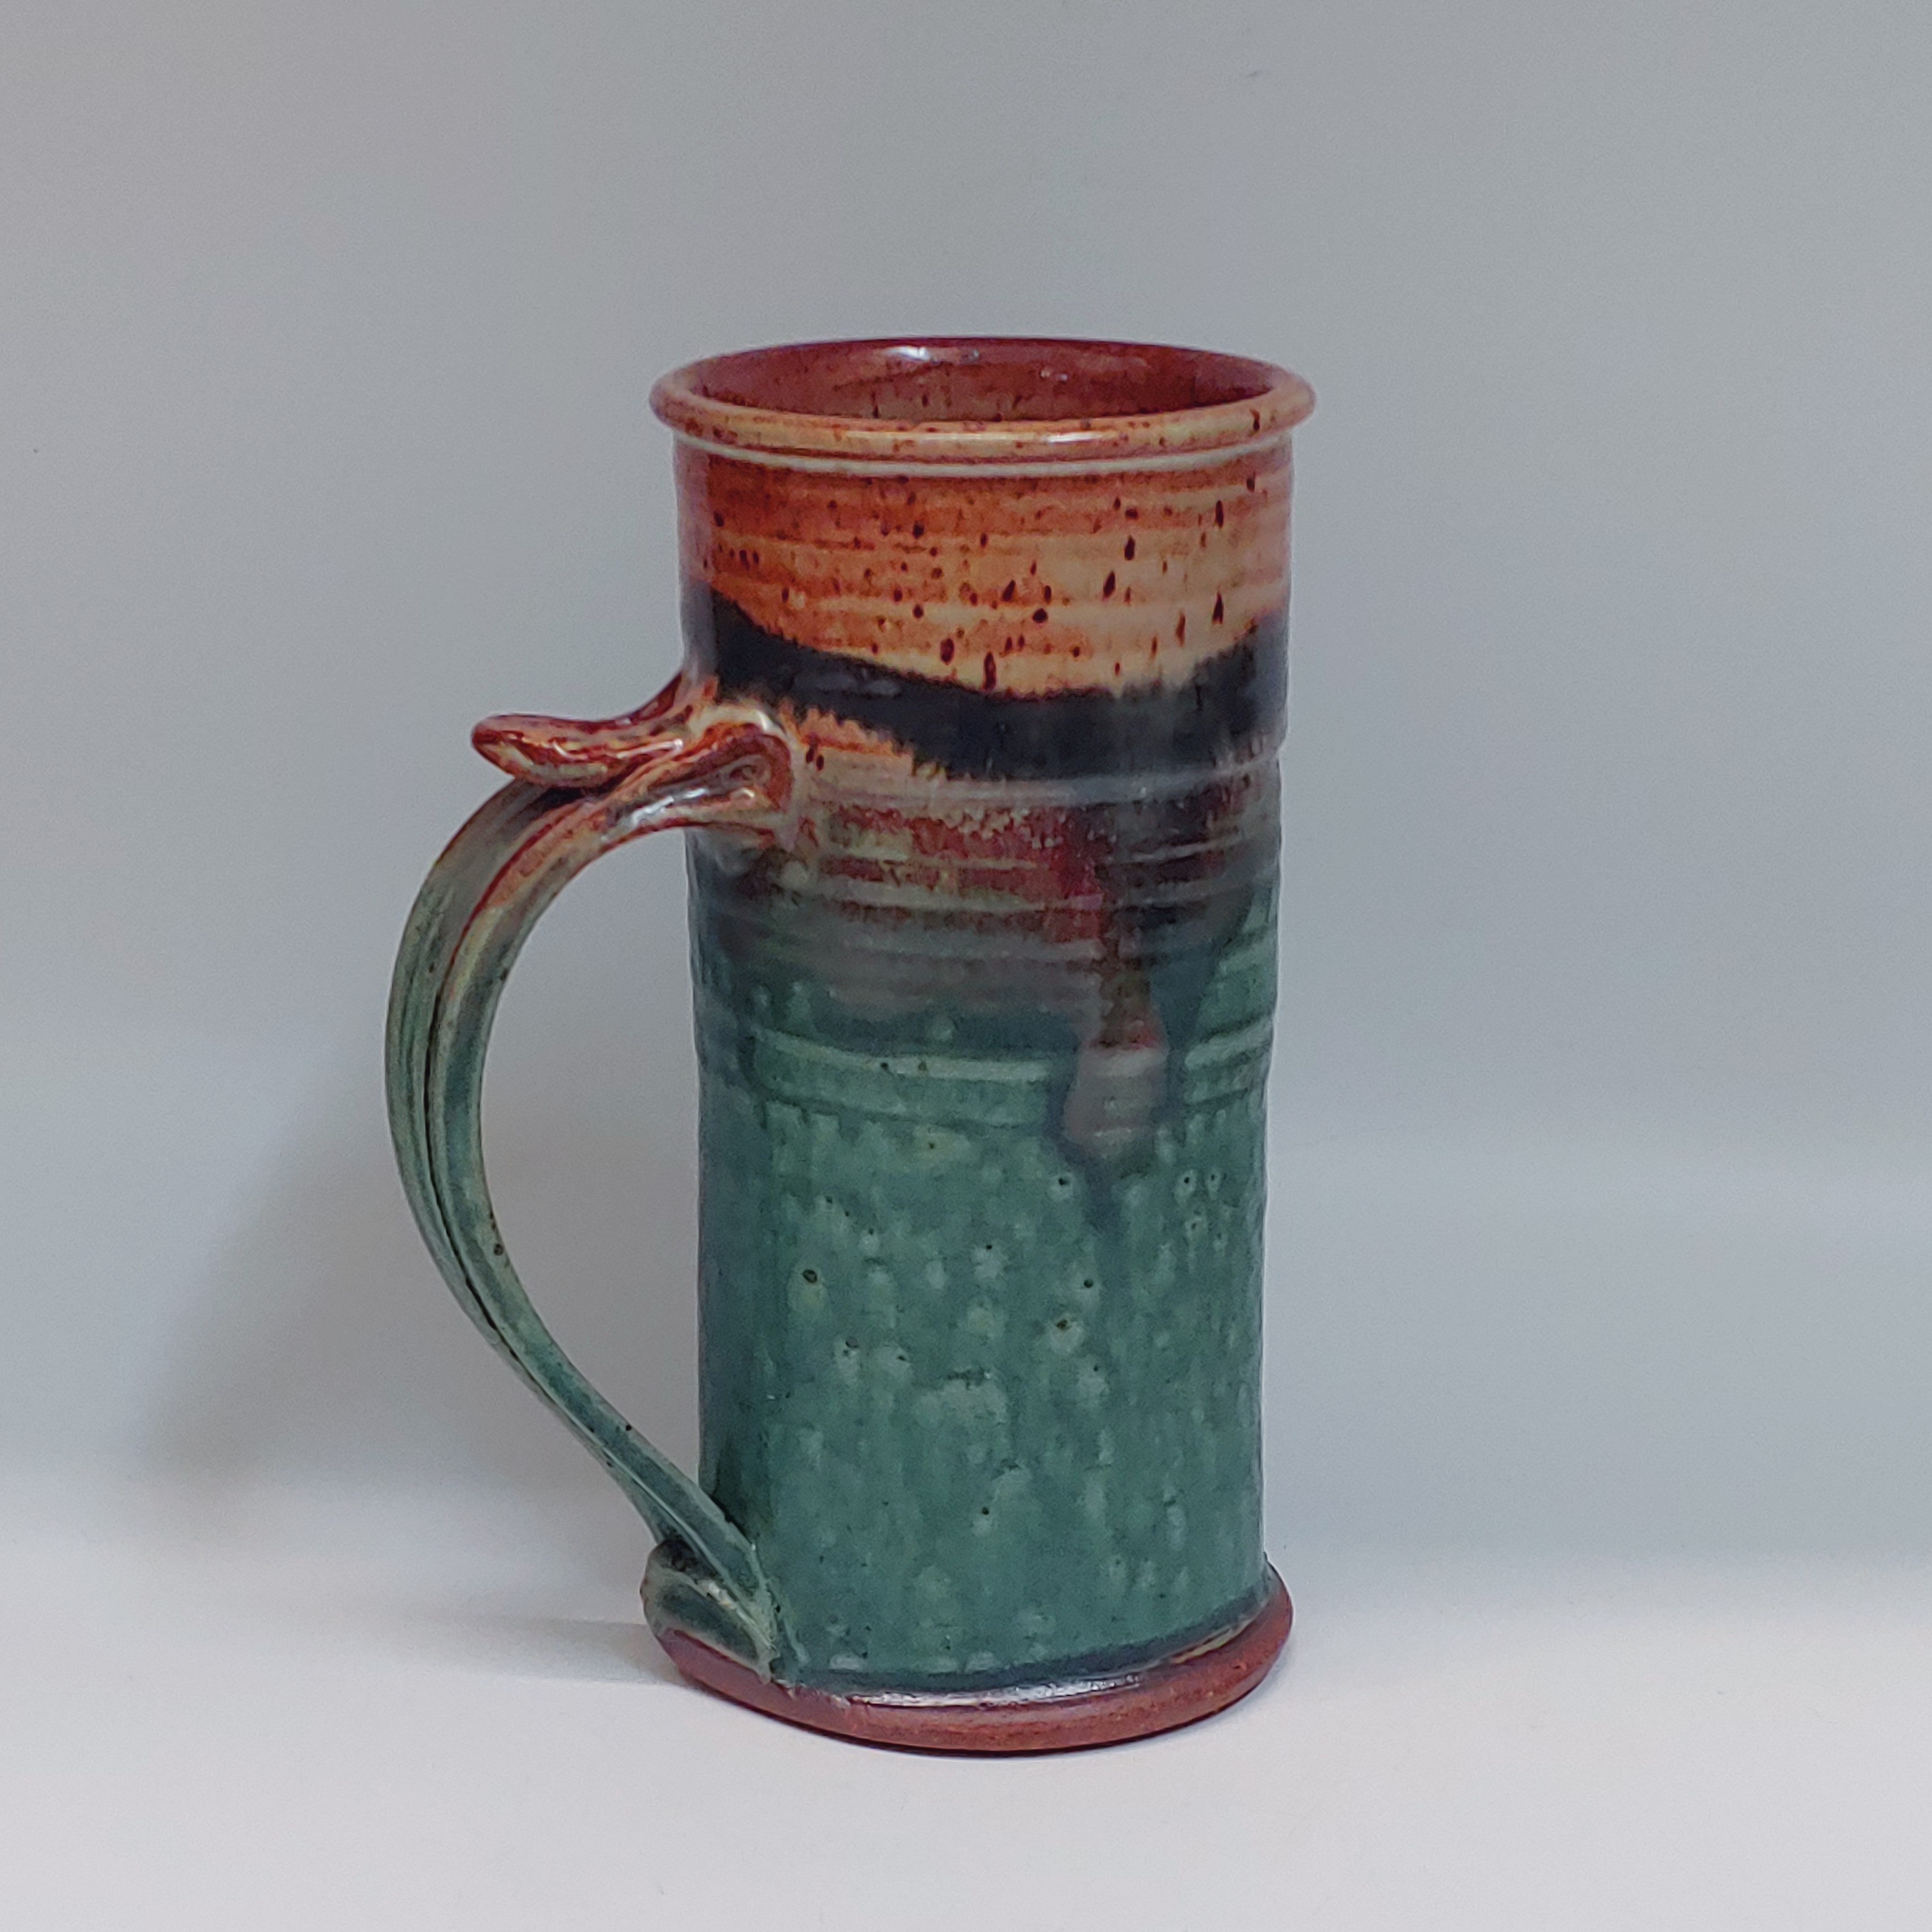 #220243 Mug, Beer Stein, Green/Tan with Black Stripe $22 at Hunter Wolff Gallery